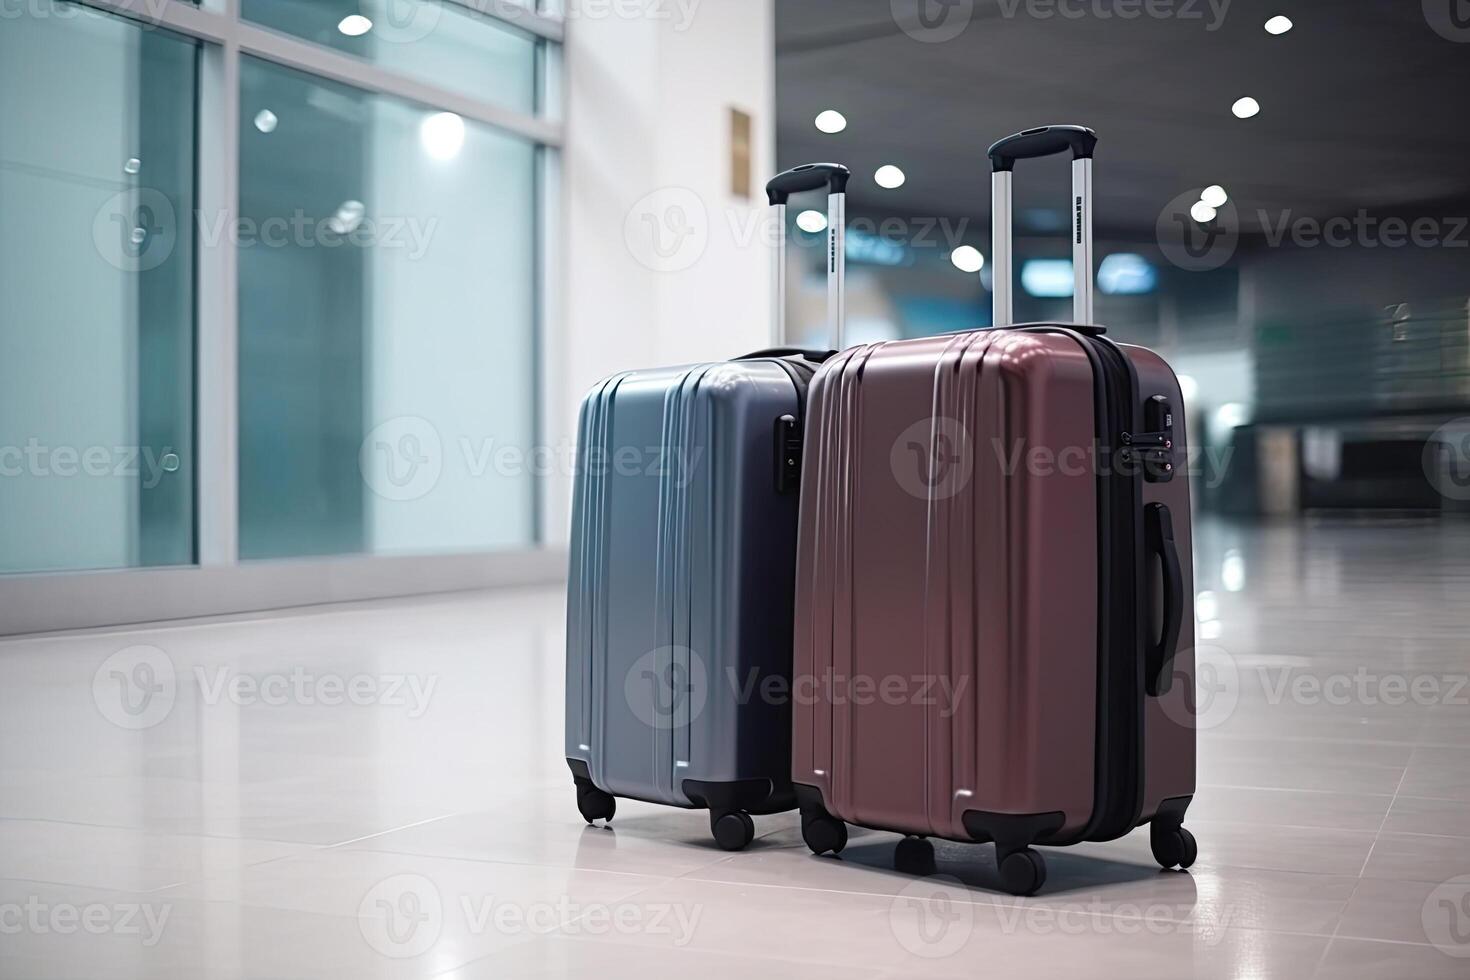 twee bagage koffers in luchthaven terminal. reizen concept. generatief ai foto